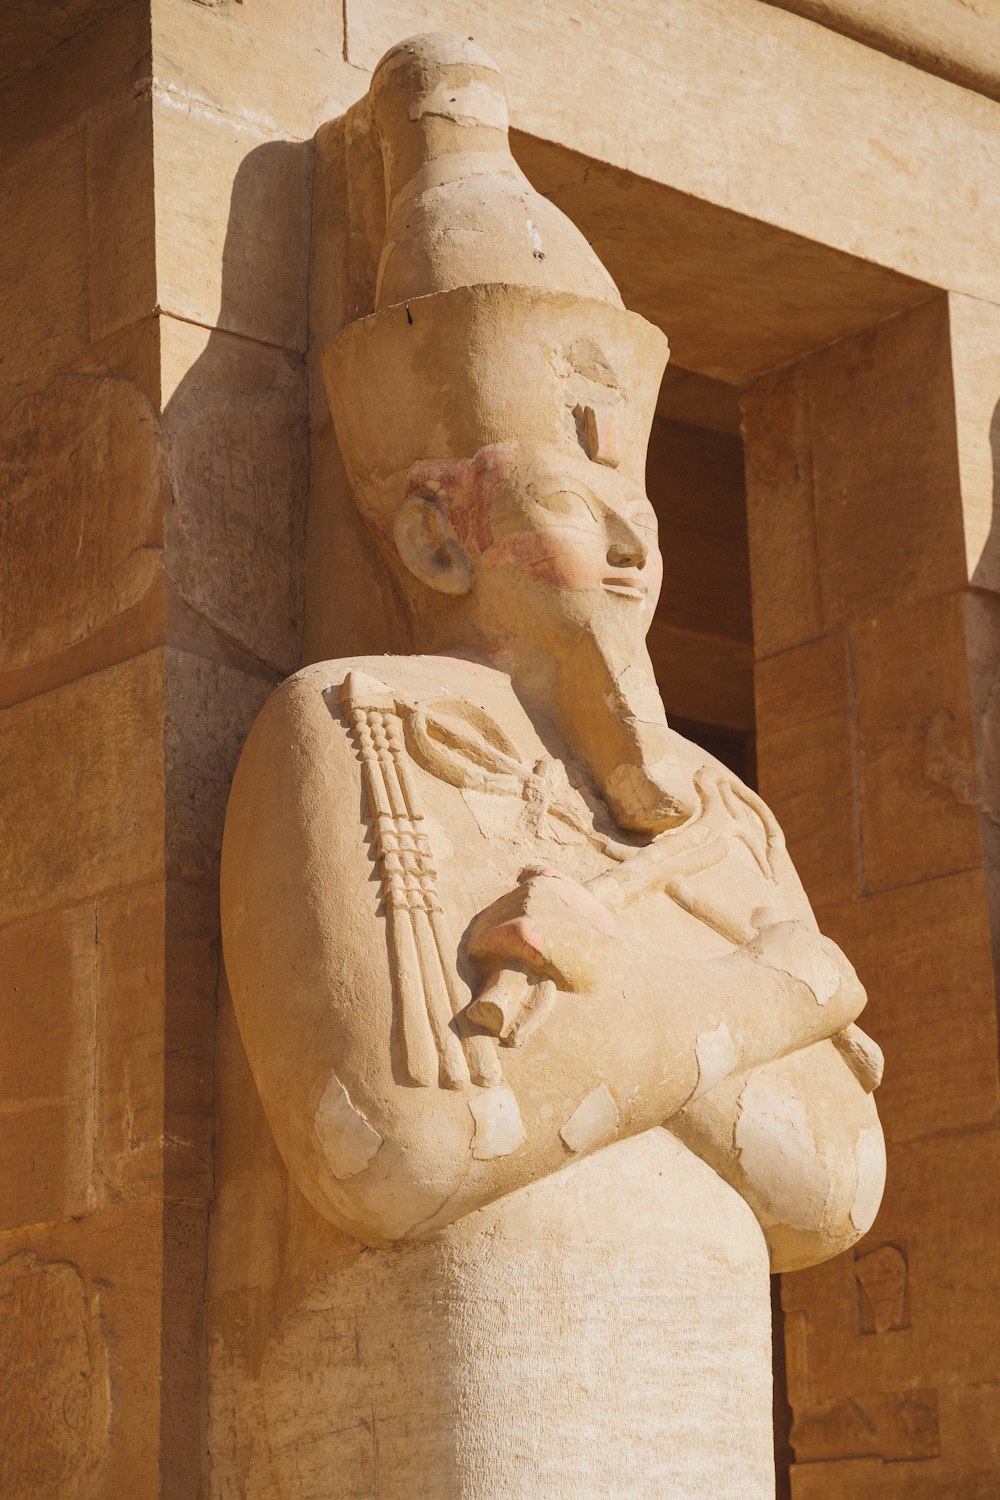 Egyptian Pharaoh statue